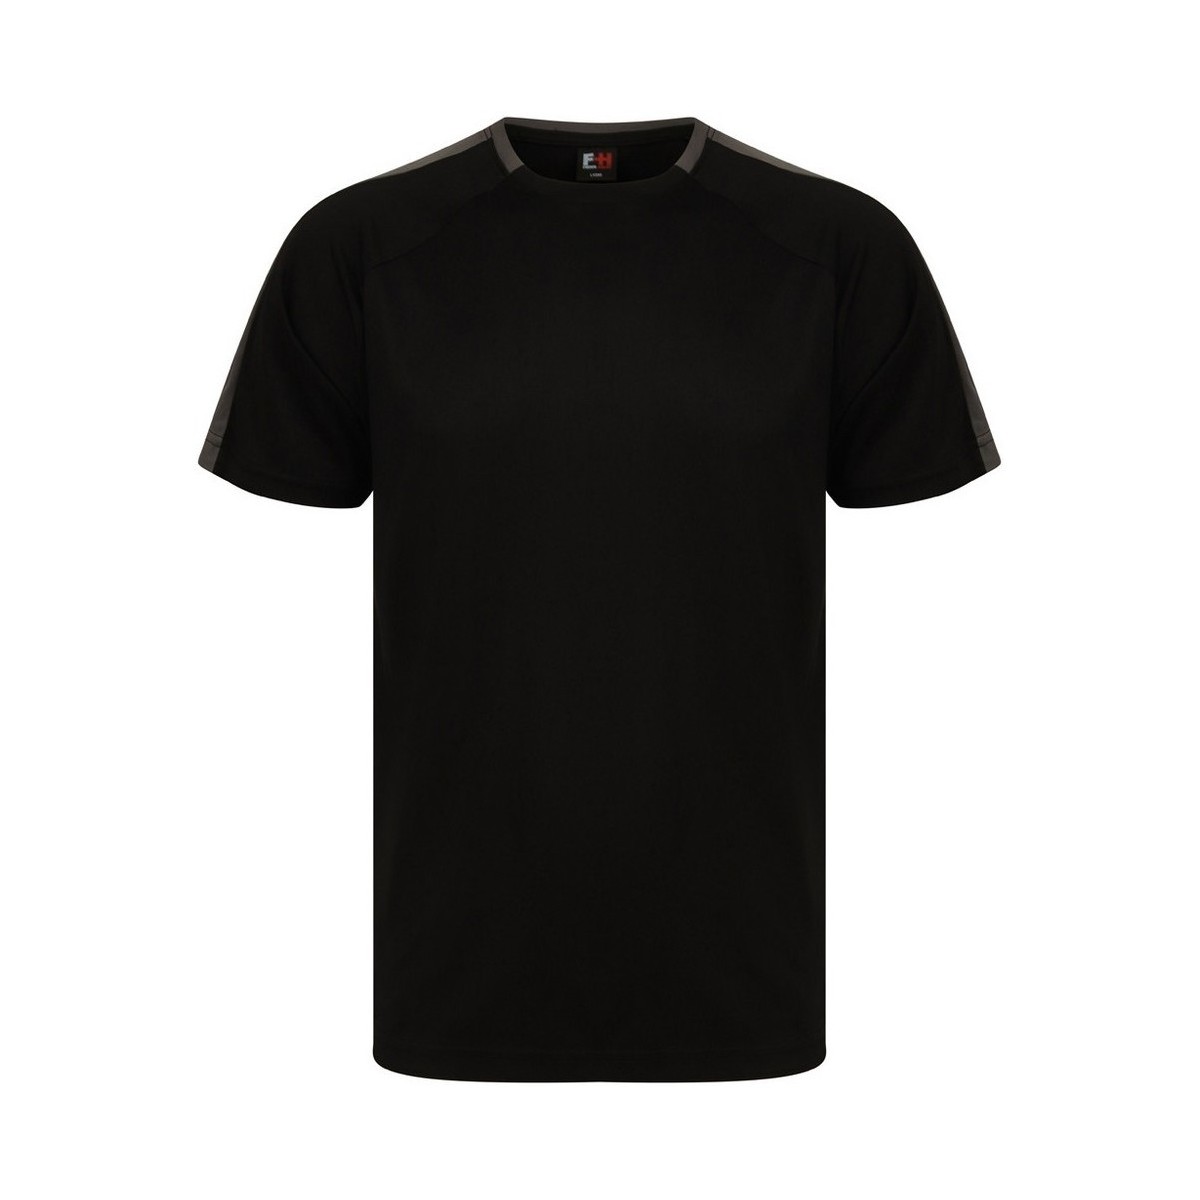 textil Tops y Camisetas Finden & Hales LV290 Negro